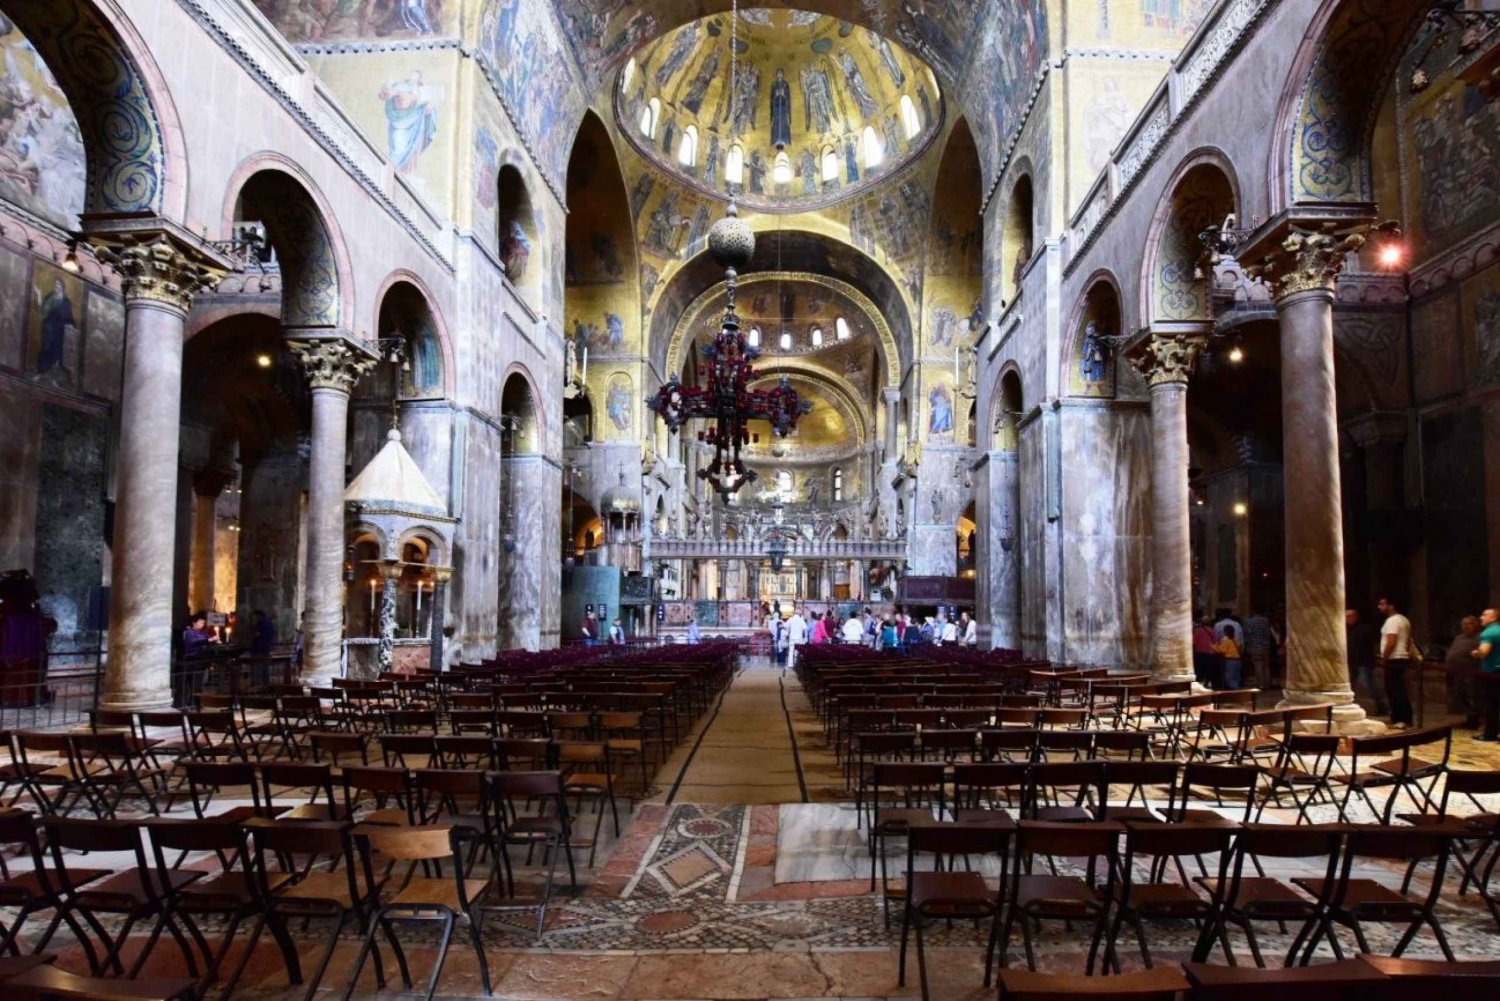 Venice: St. Mark's Basilica Guided Visit & Terrace Access